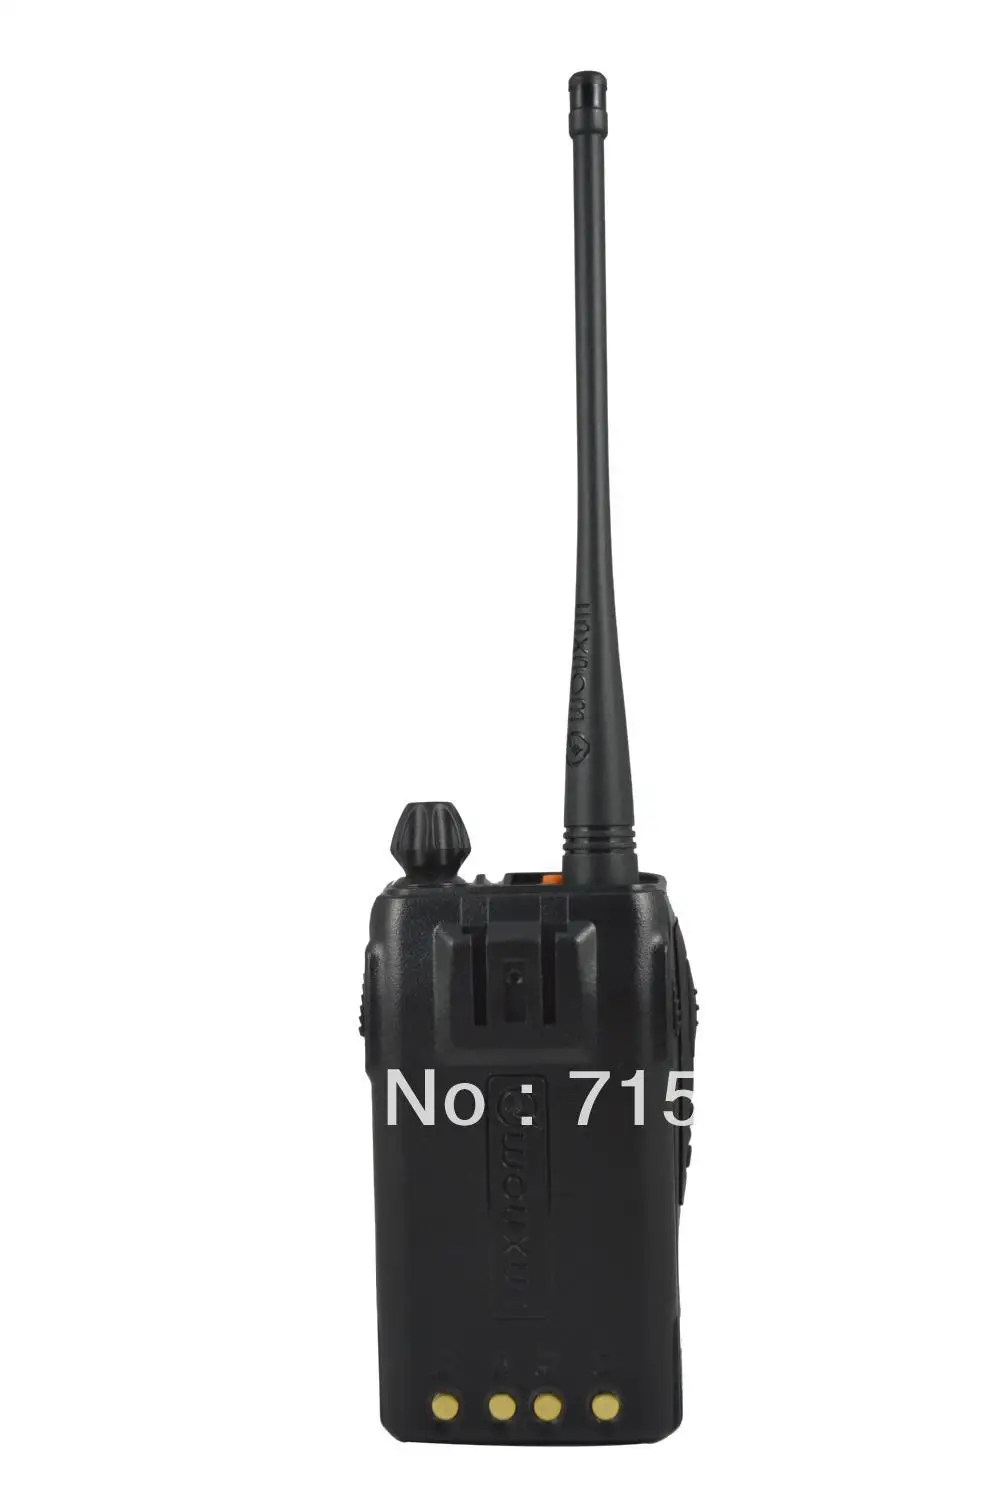 WOUXUN двухстороннее радио 136-174 MHz 128 CH 5 W WOUXUN KG-669P портативная переносная fm-рация